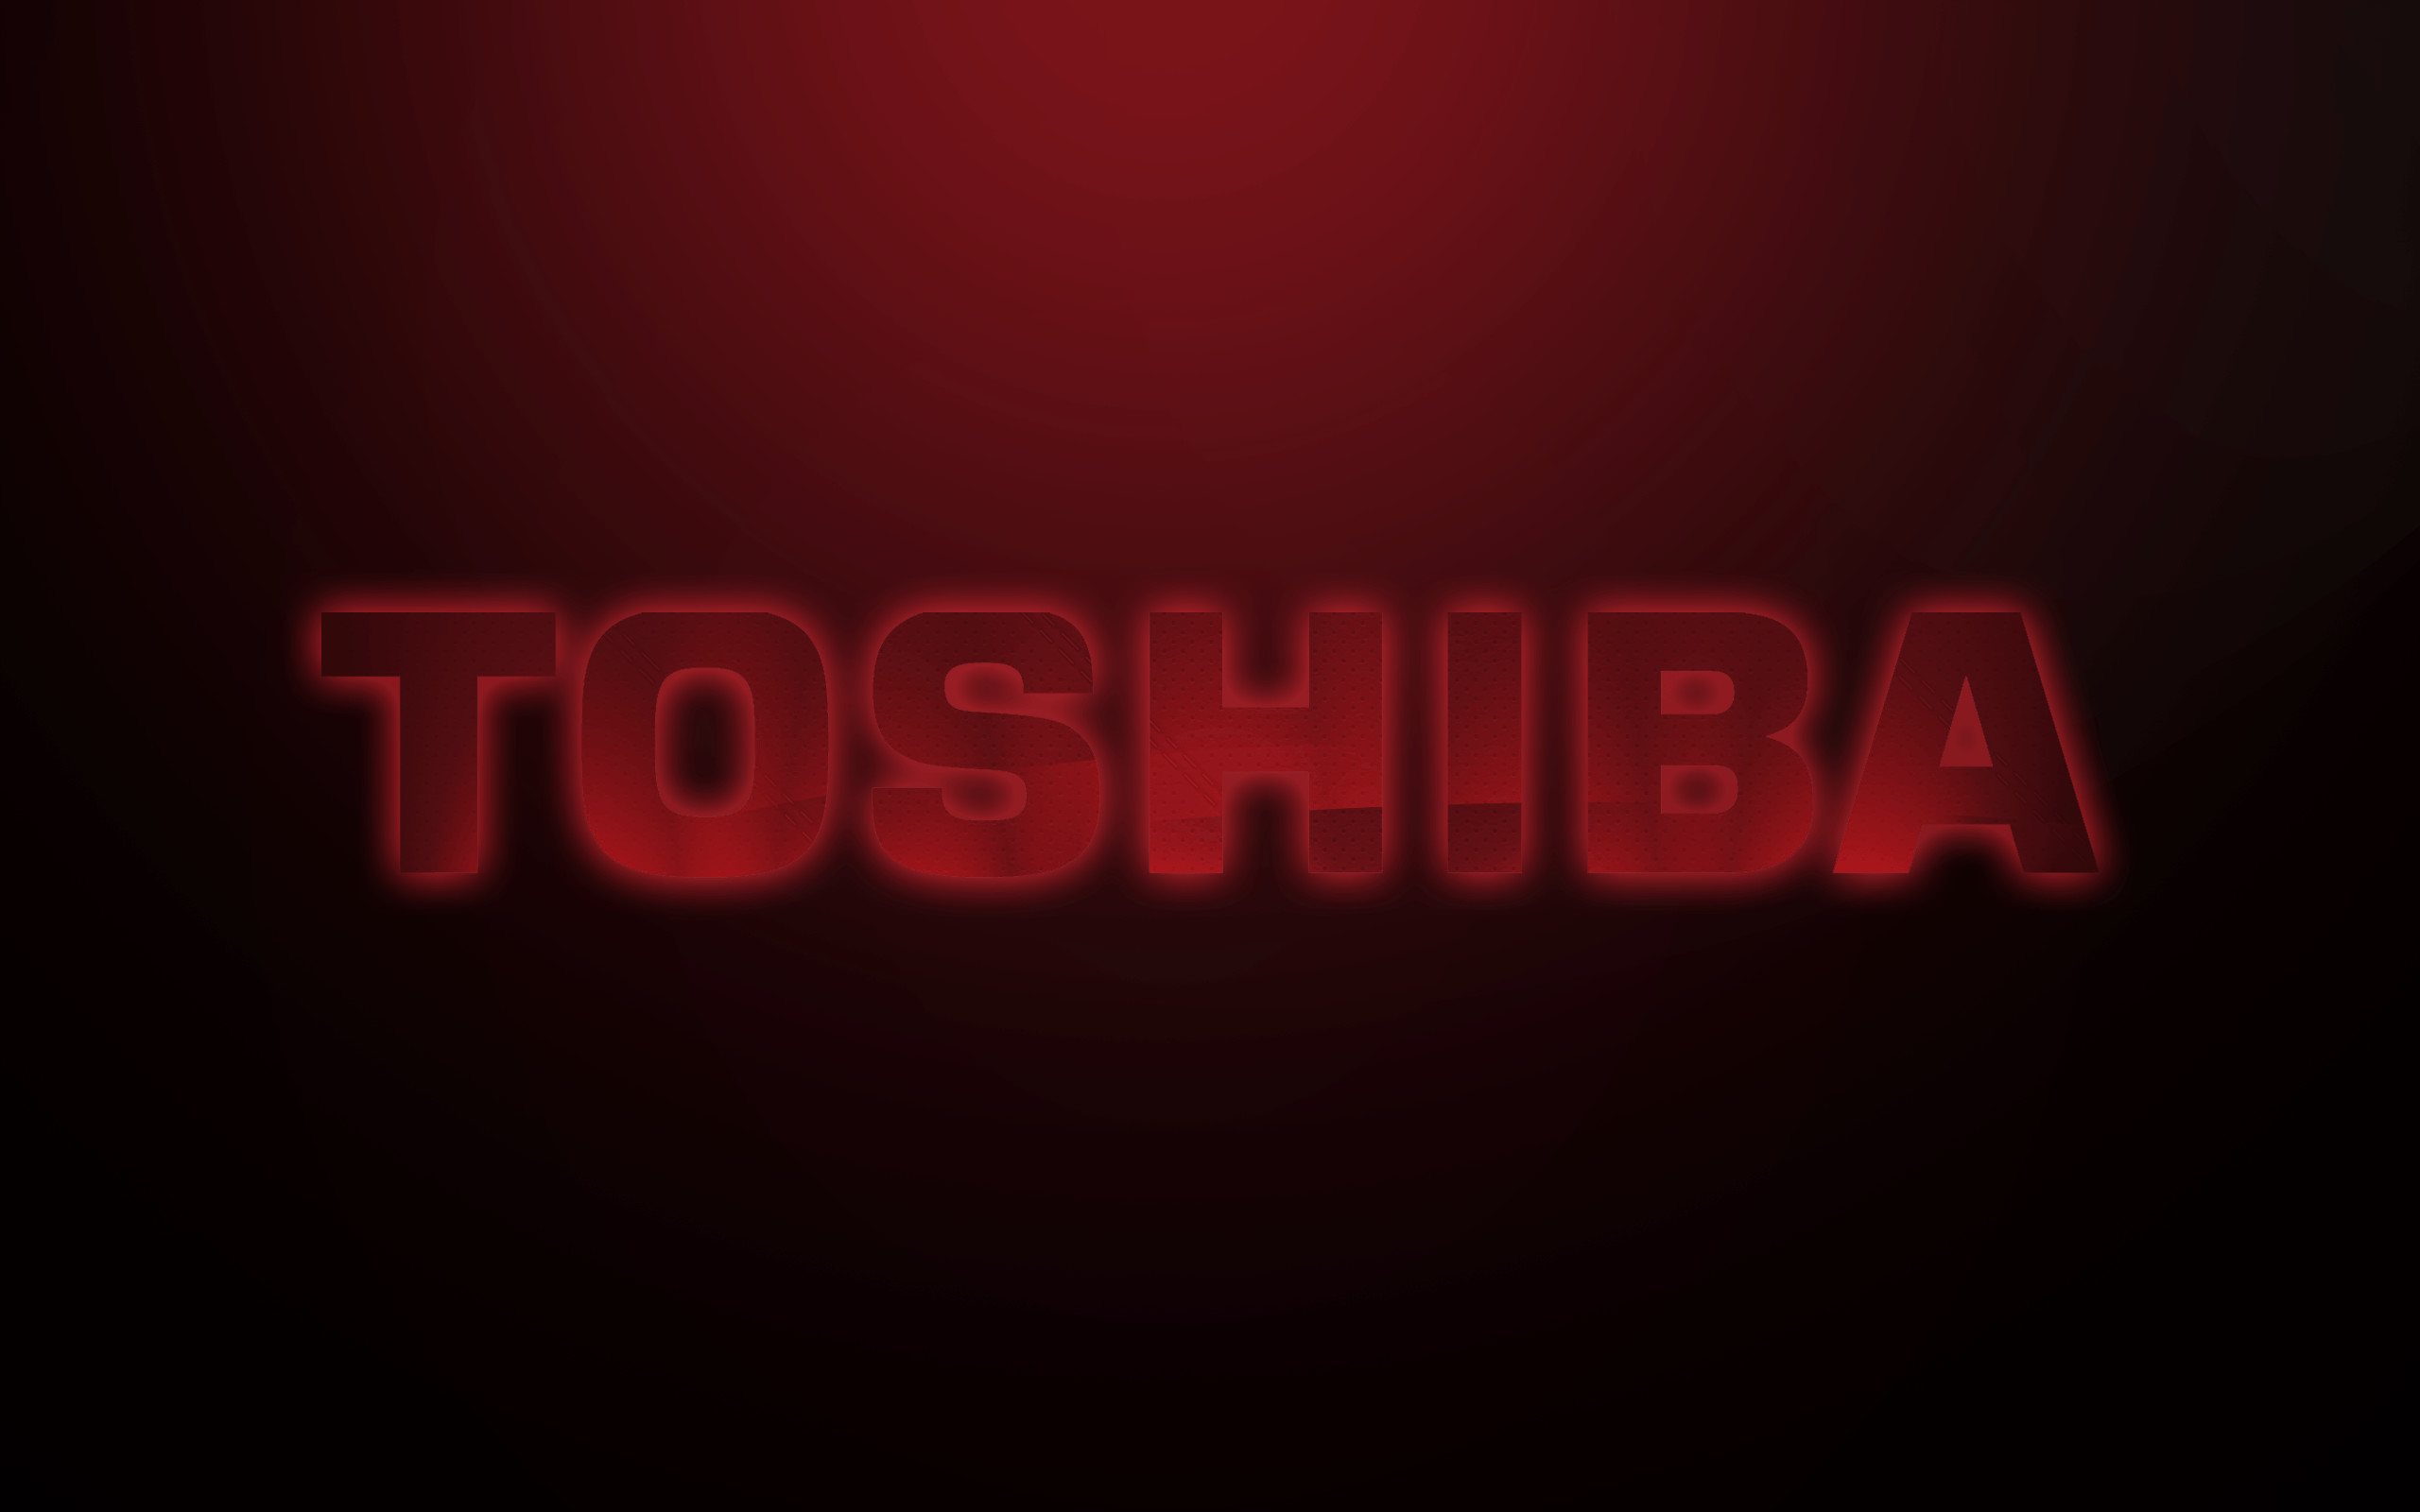 2560x1600 Toshiba Wallpapers - Full HD wallpaper search